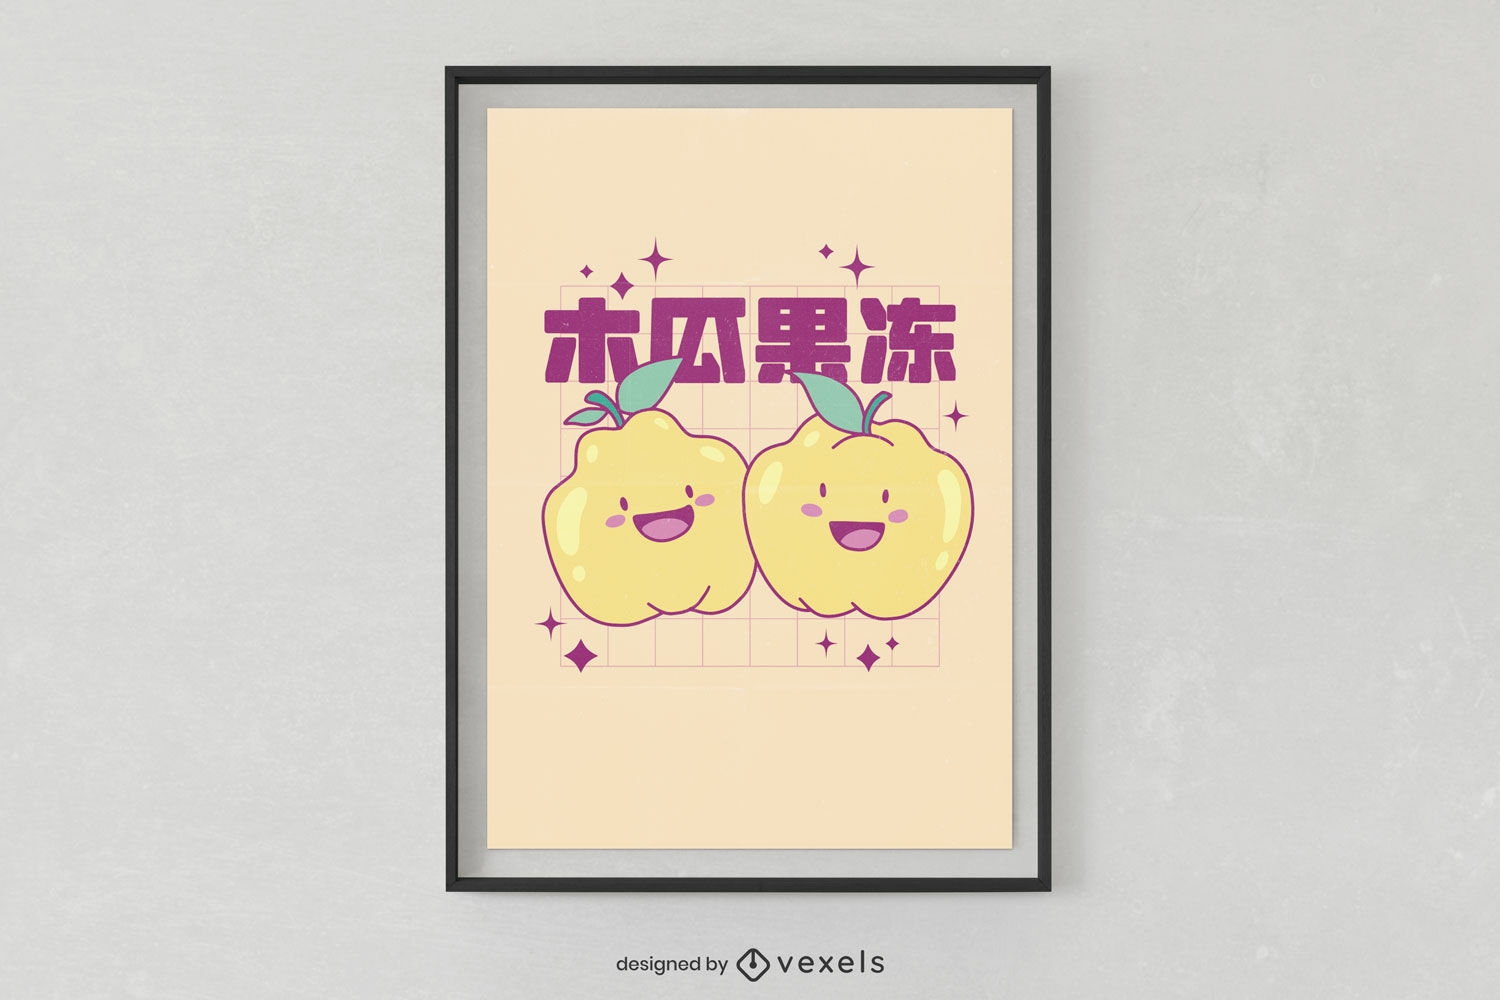 Posterdesign mit Kawaii-Fruchtfiguren